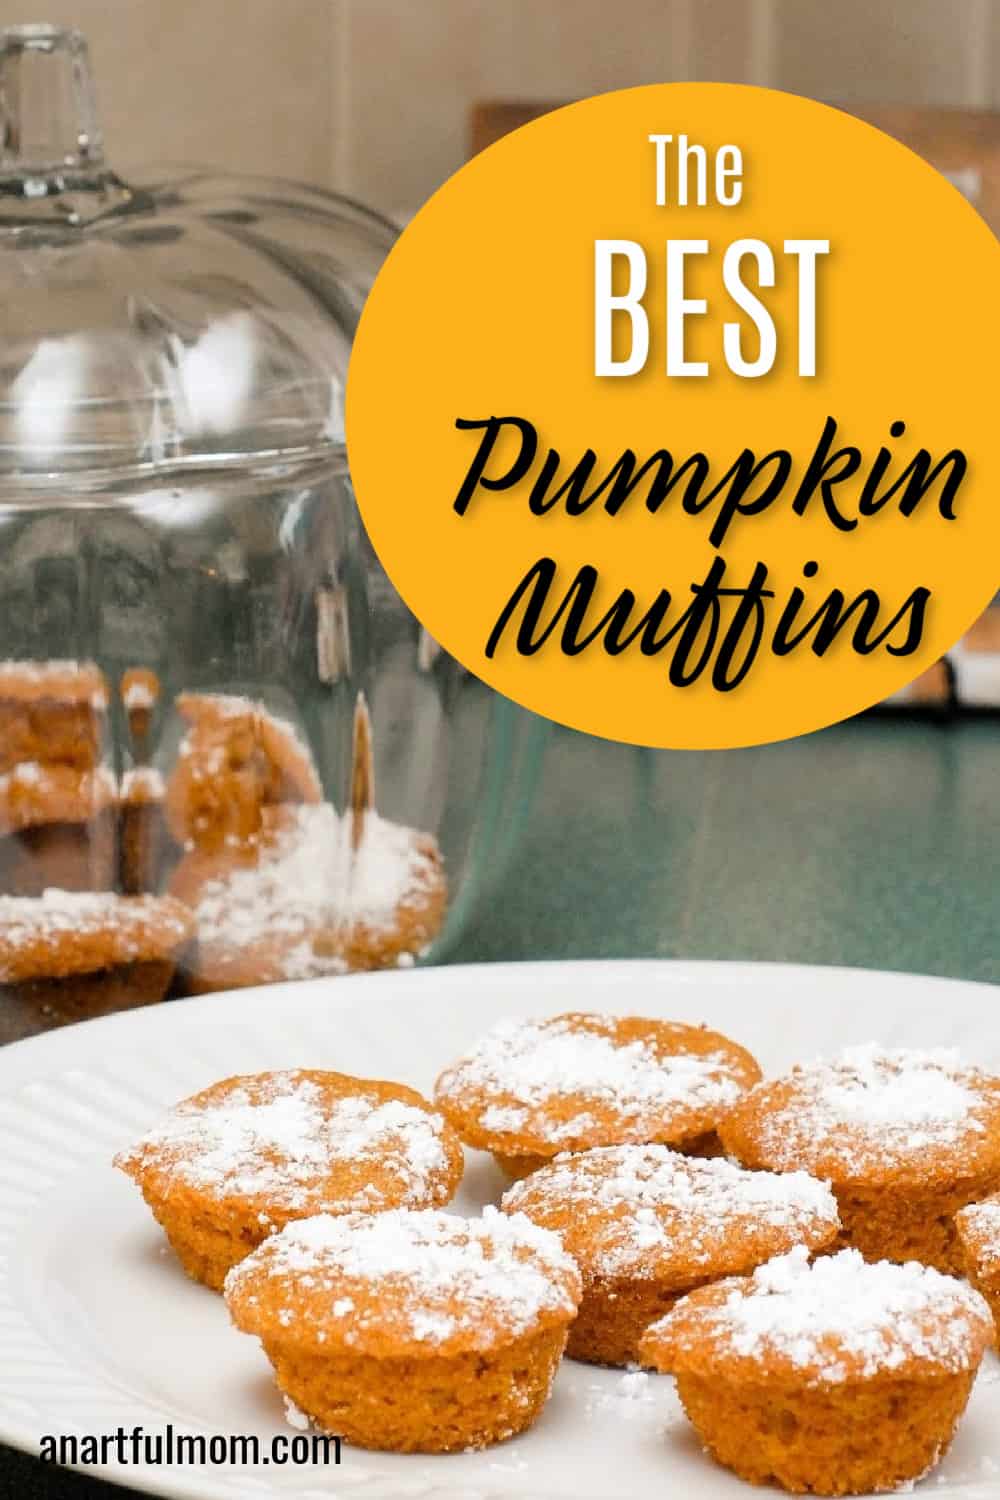 The Best Pumpking Muffins